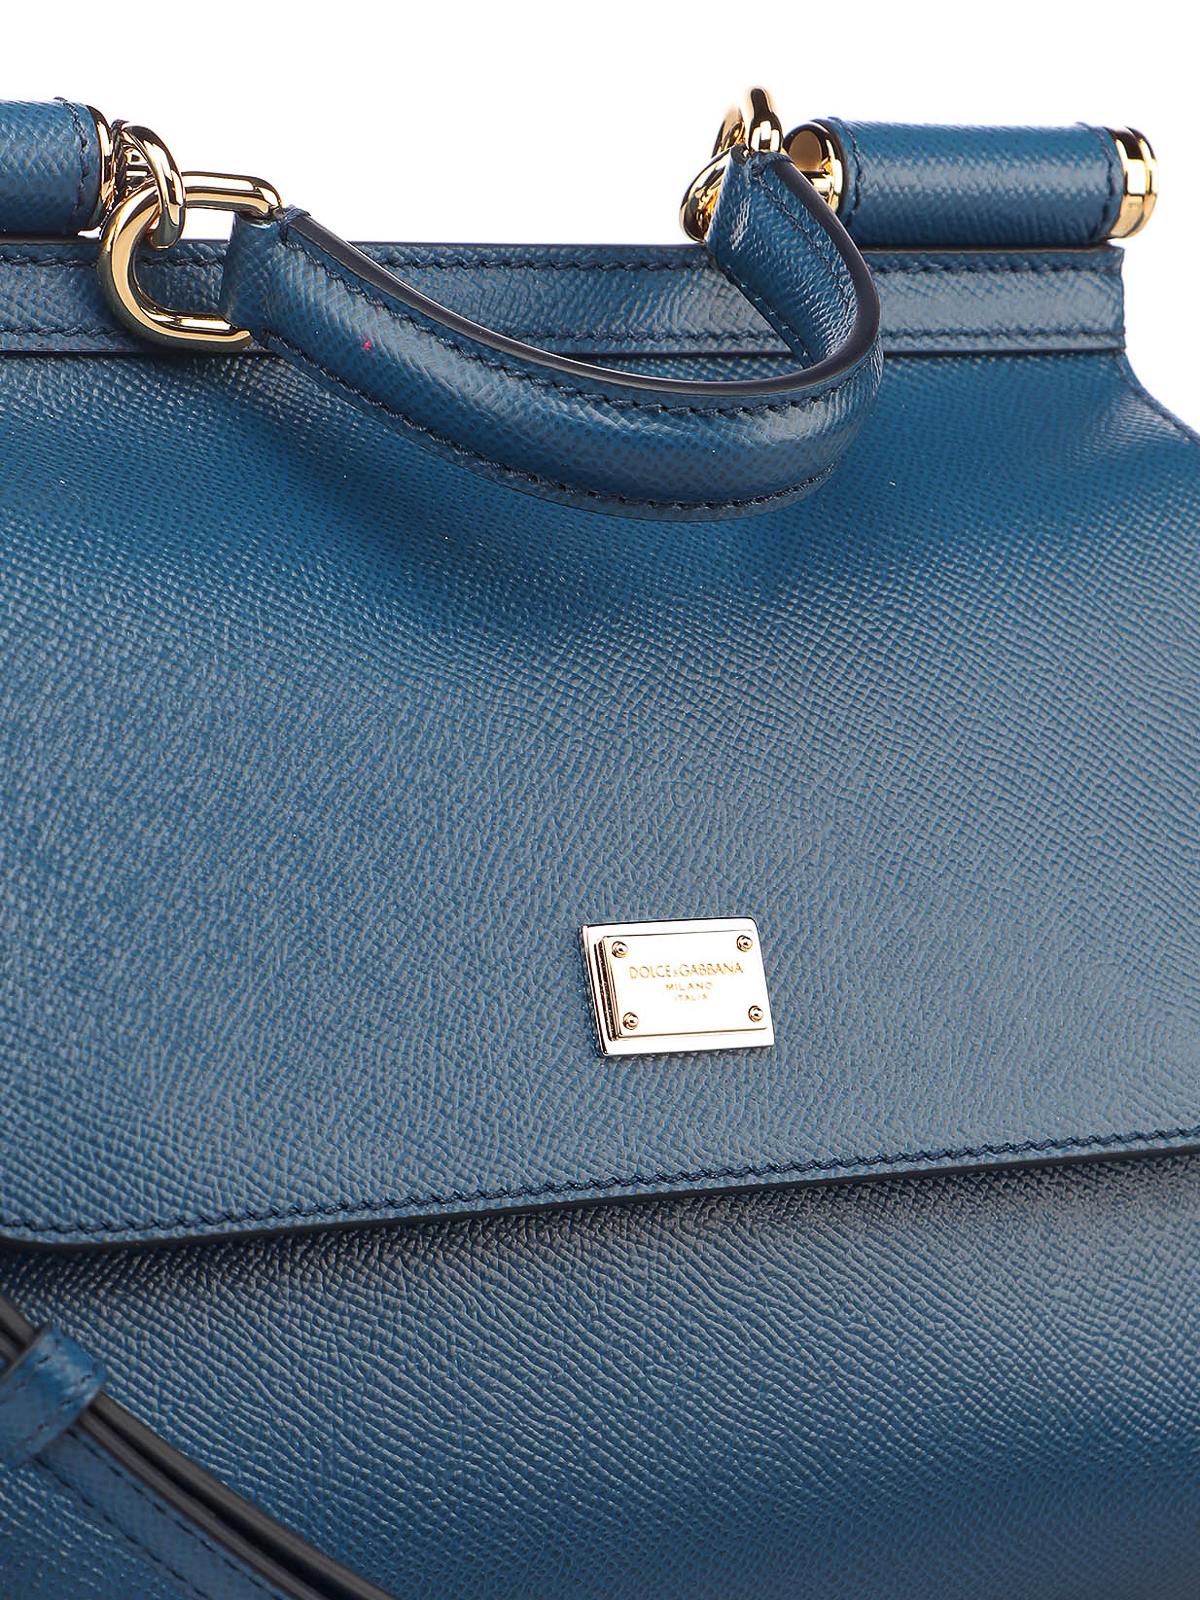 Dolce & Gabbana, Bags, Dolce Gabbana Blue Leather Medium Shoulder Sicily  Bag